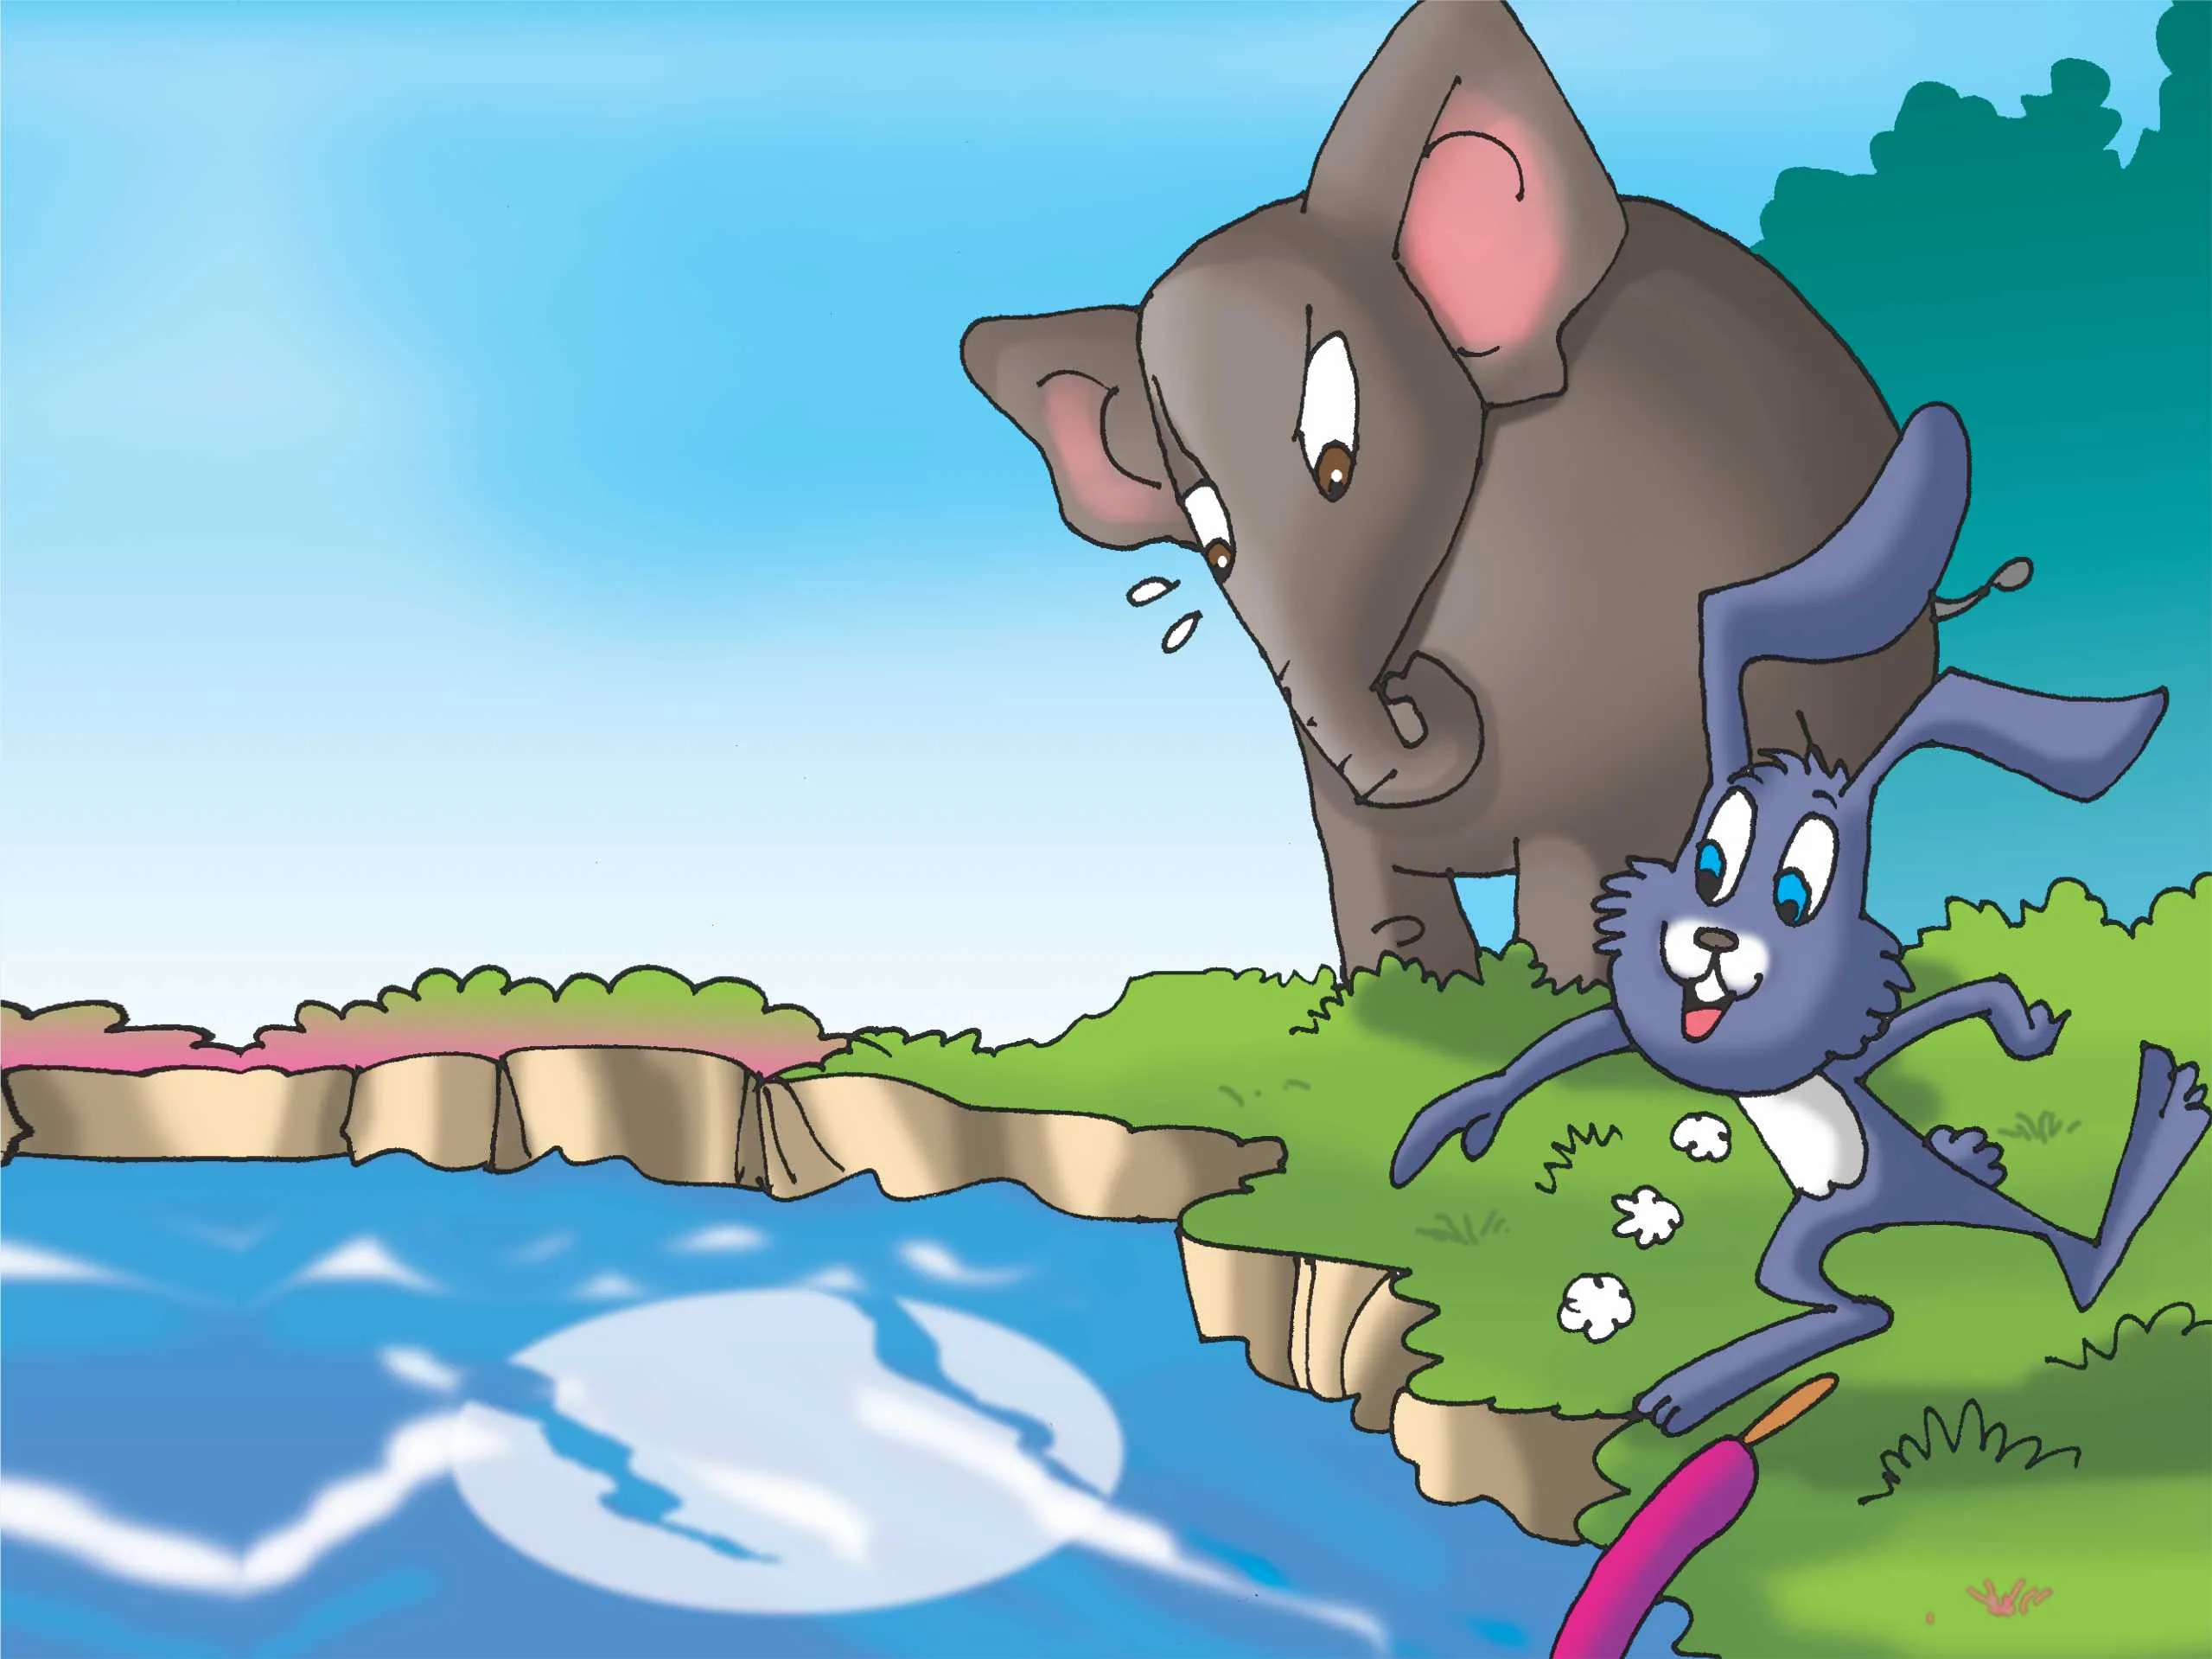 Elephant and Rabbit near a pond Cartoon image